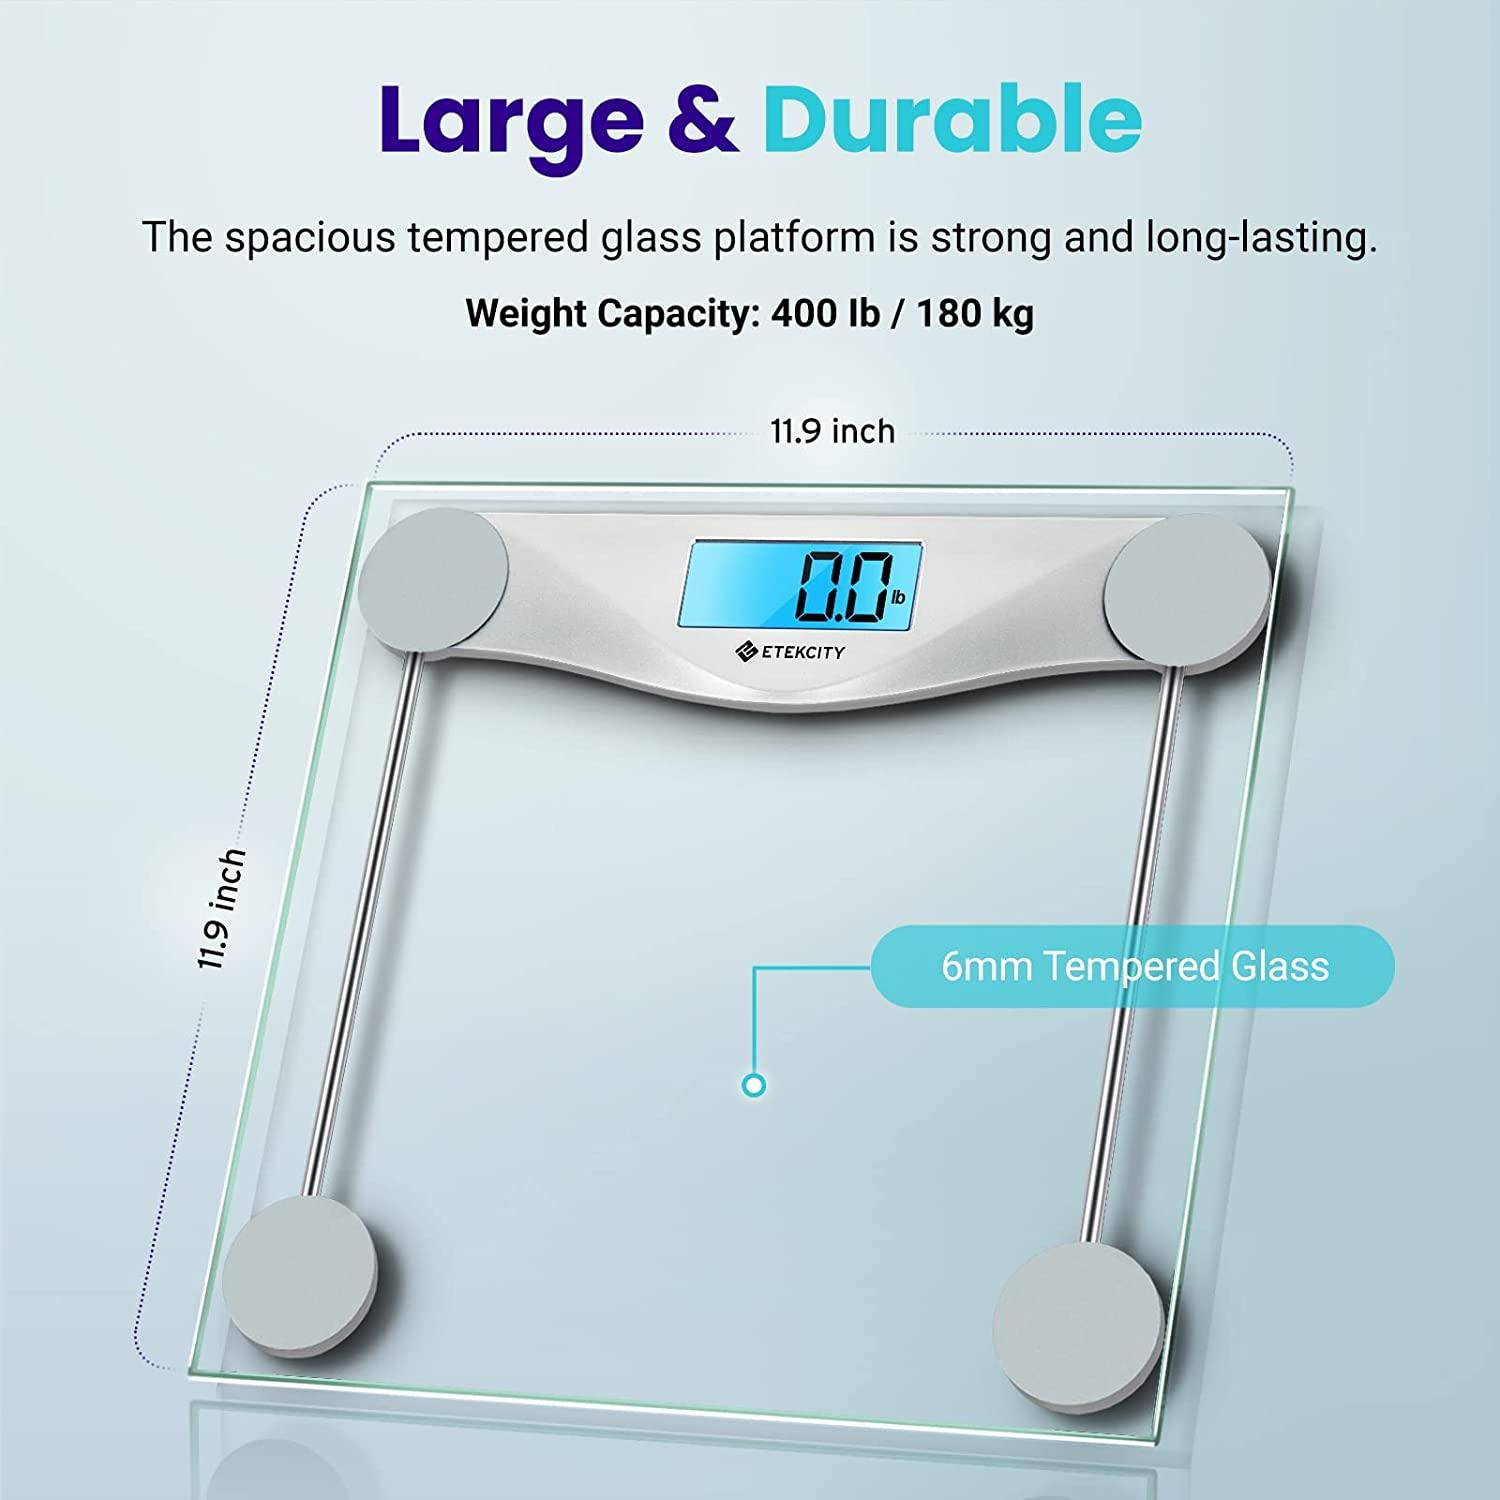 Digital Bathroom Scale for Body Weight, Silver/Glass